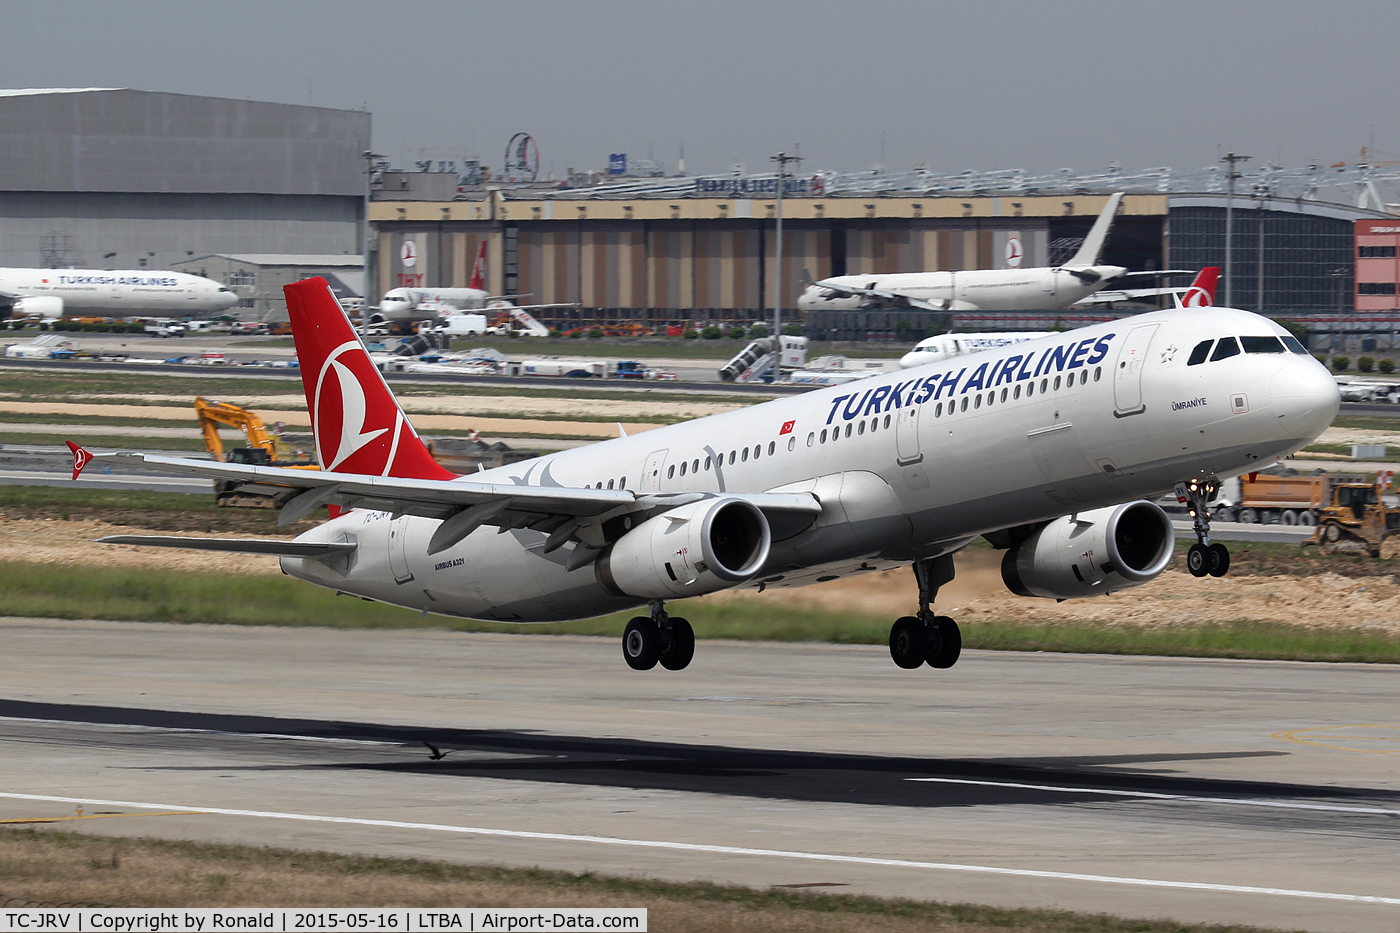 TC-JRV, 2012 Airbus A321-231 C/N 5077, at ist